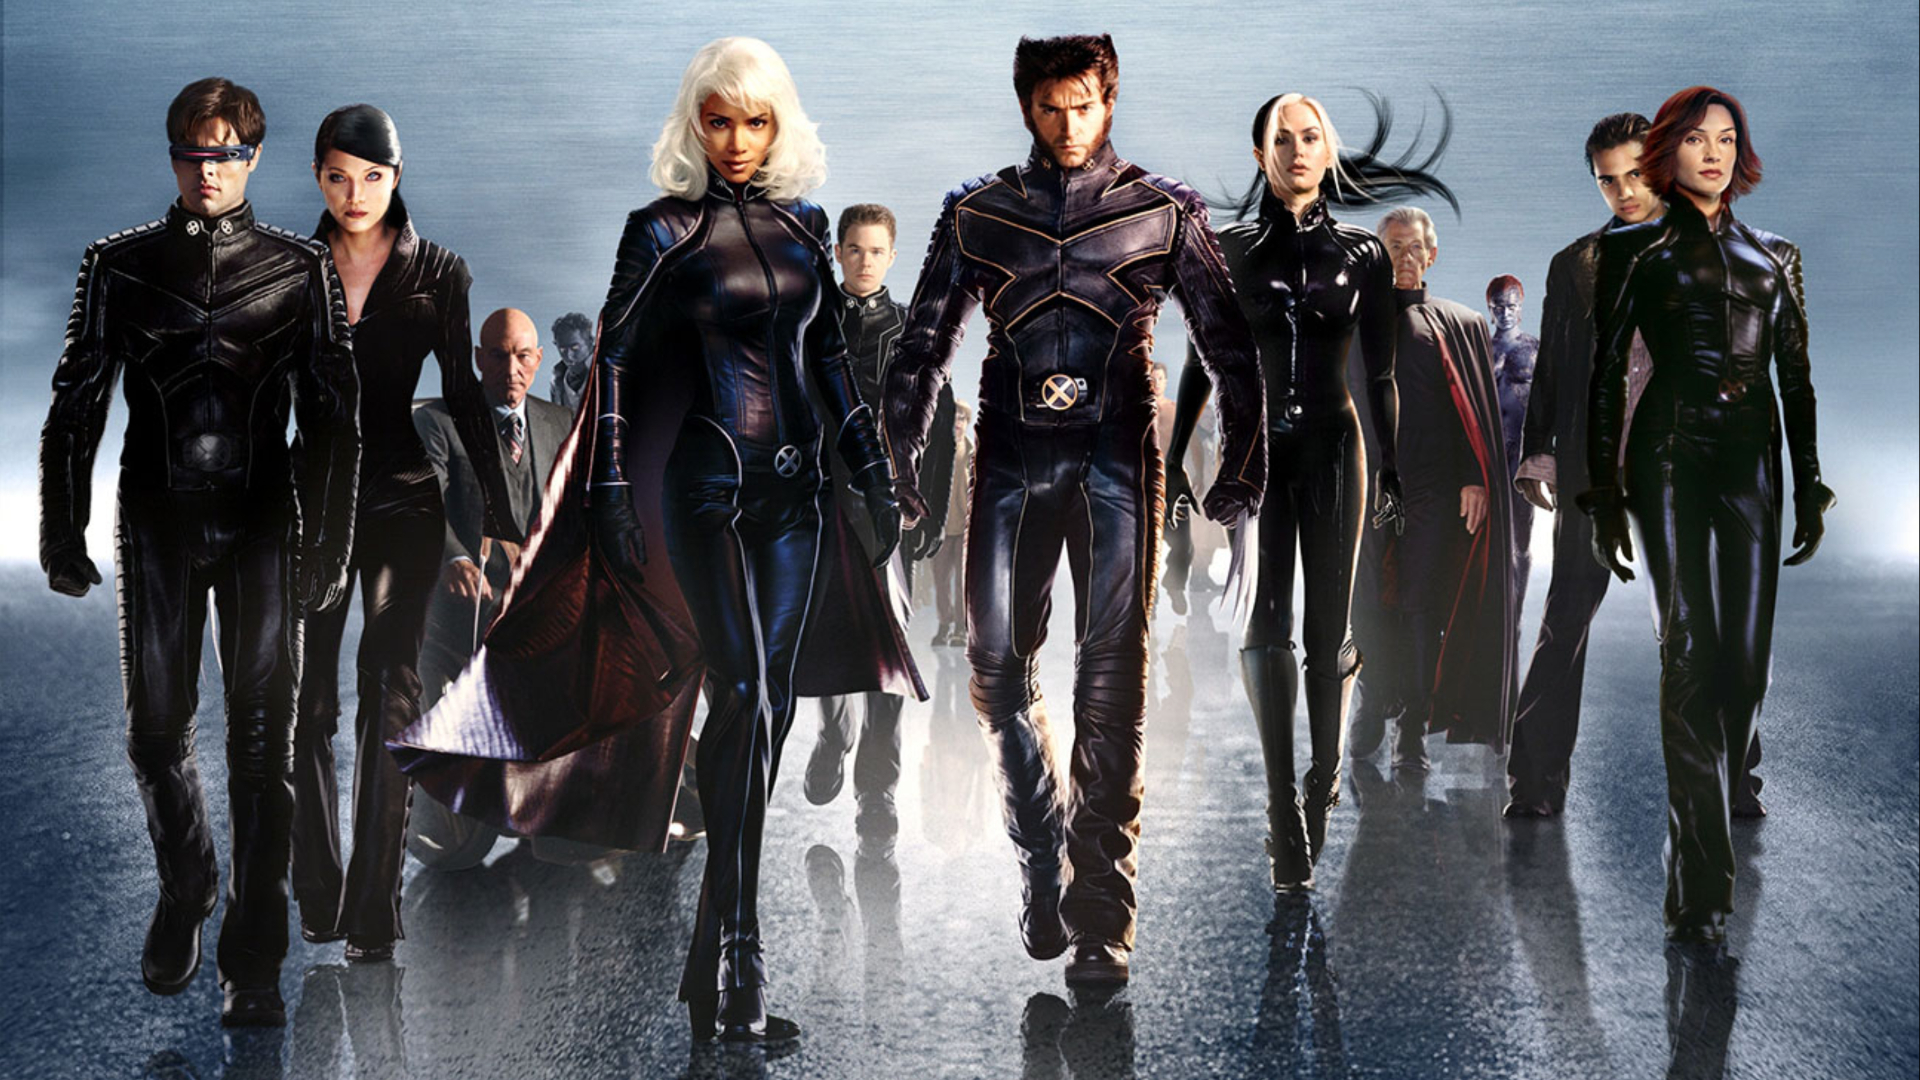 Os vários membros dos X-Men fantasiados.